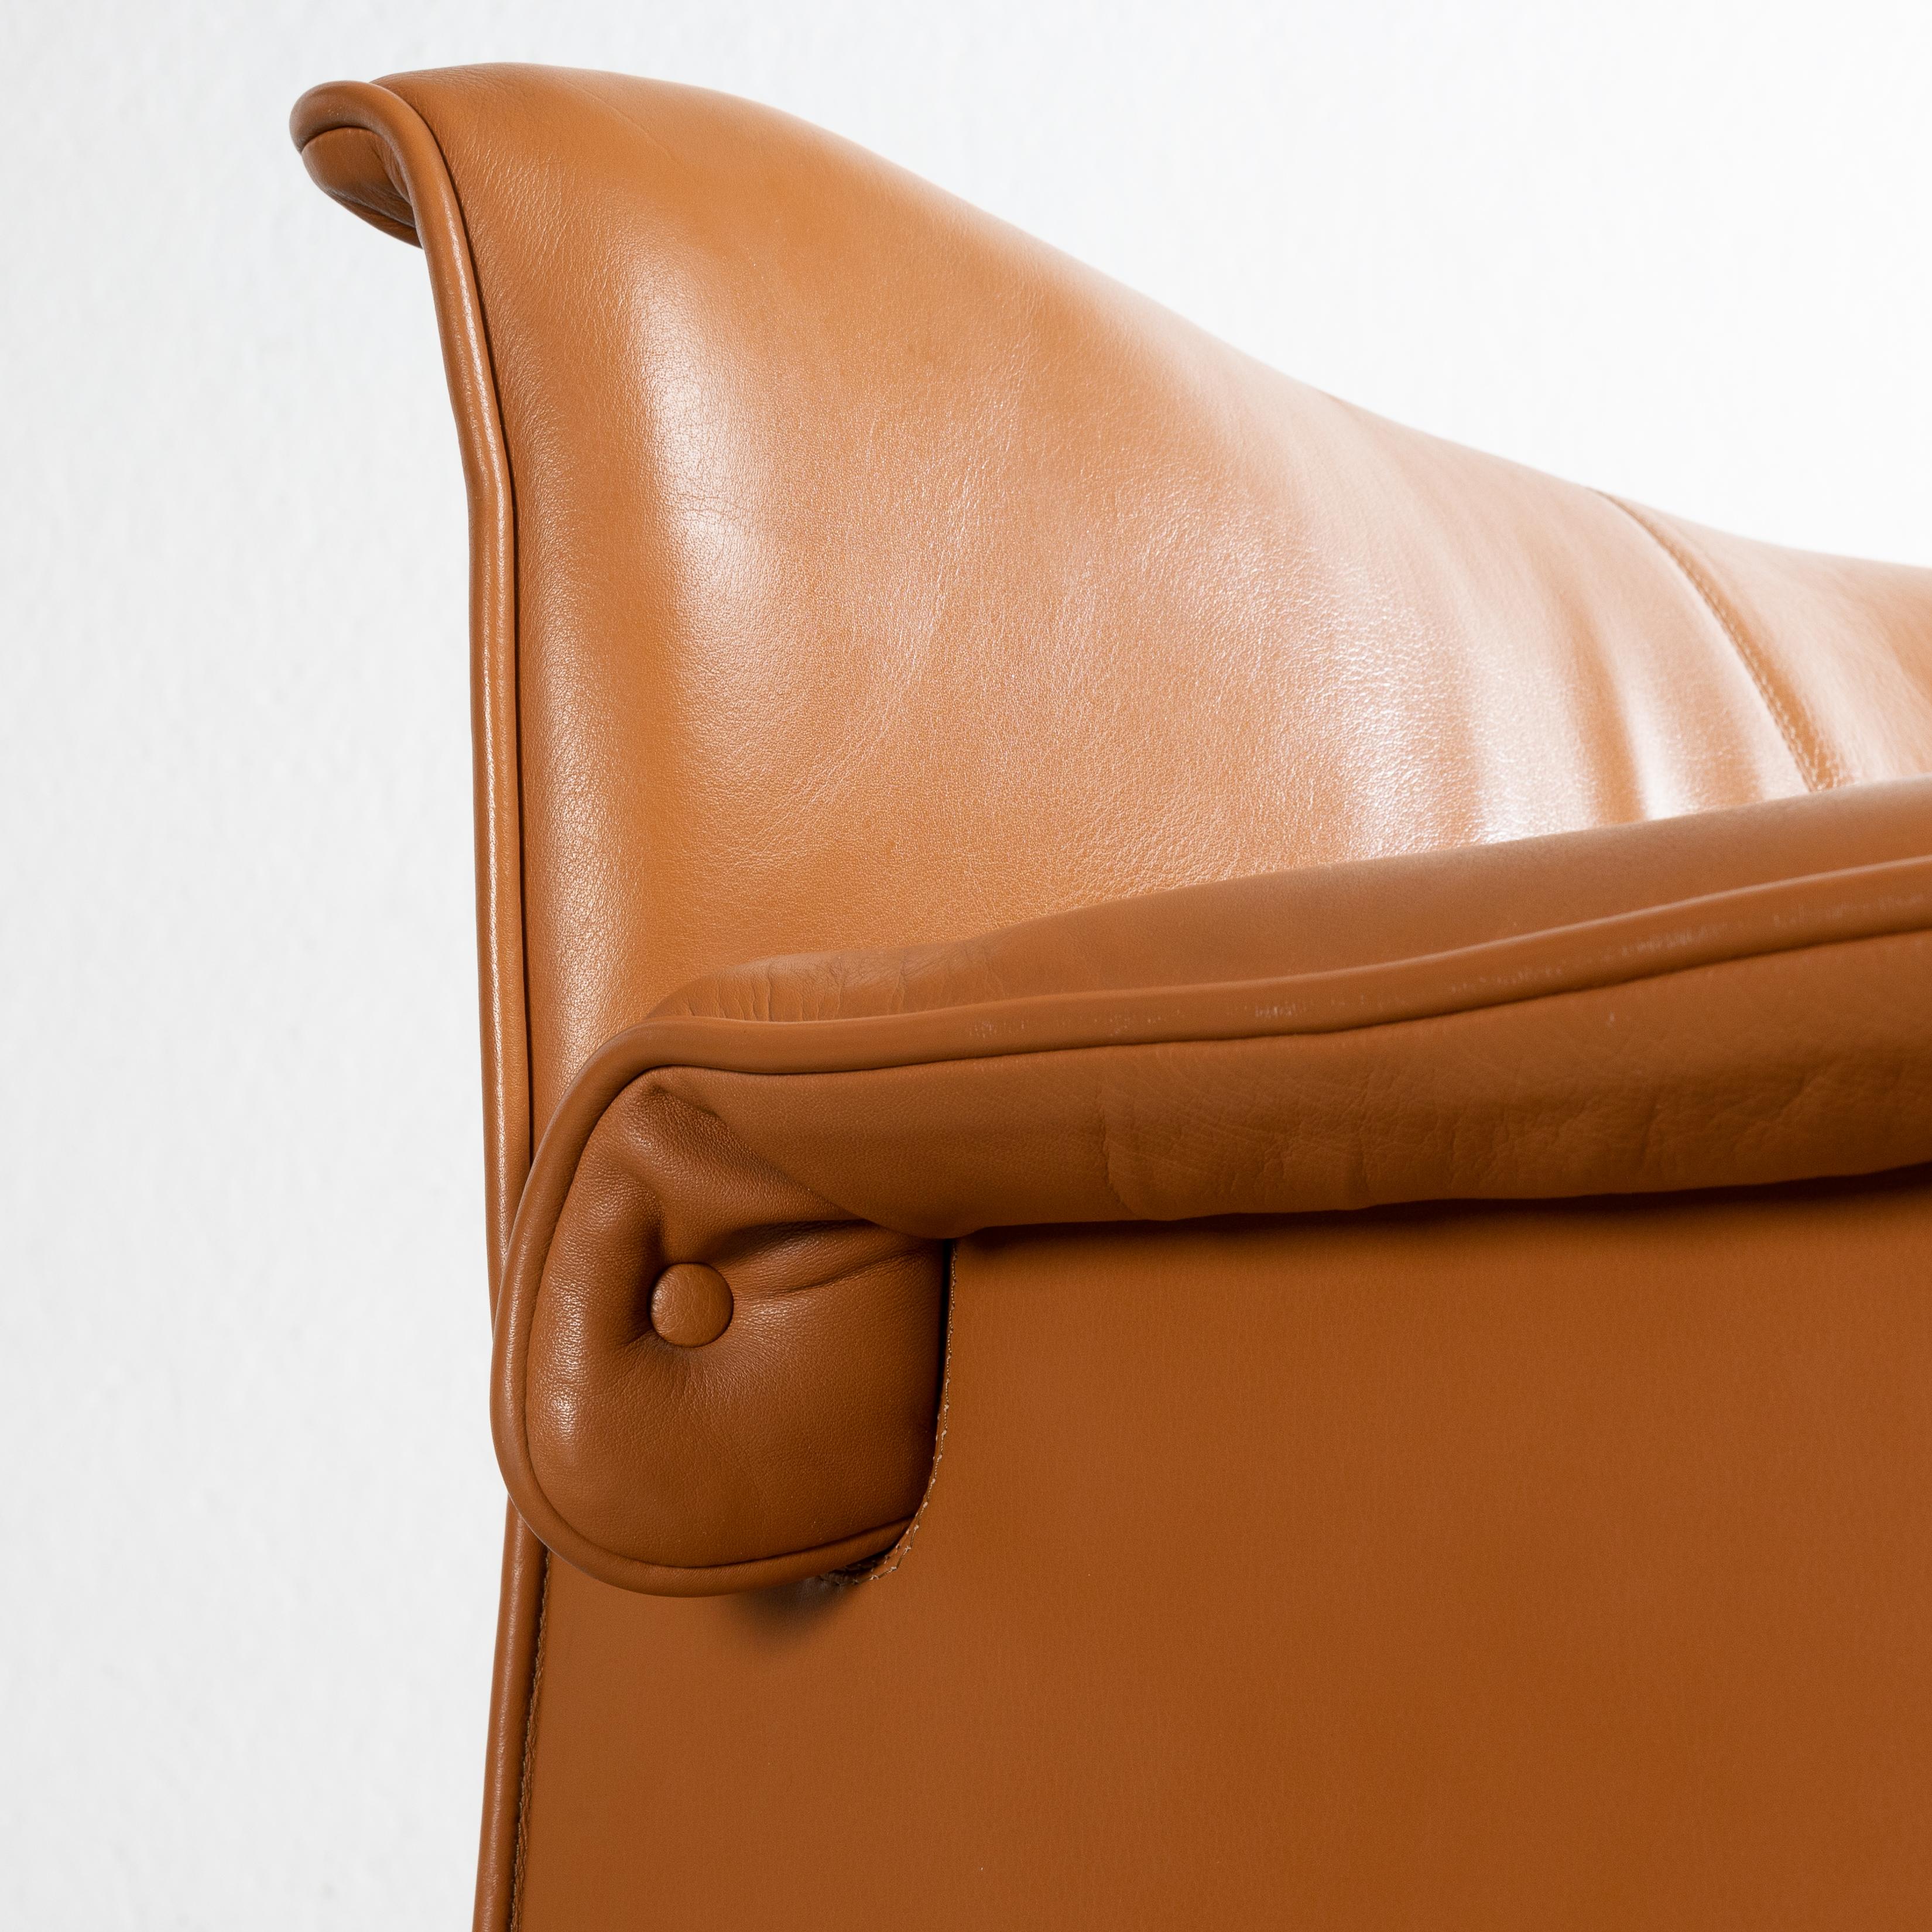 Artona by Afra & Tobia Scarpa – Walnut veneer laminate desk and chair For Sale 11